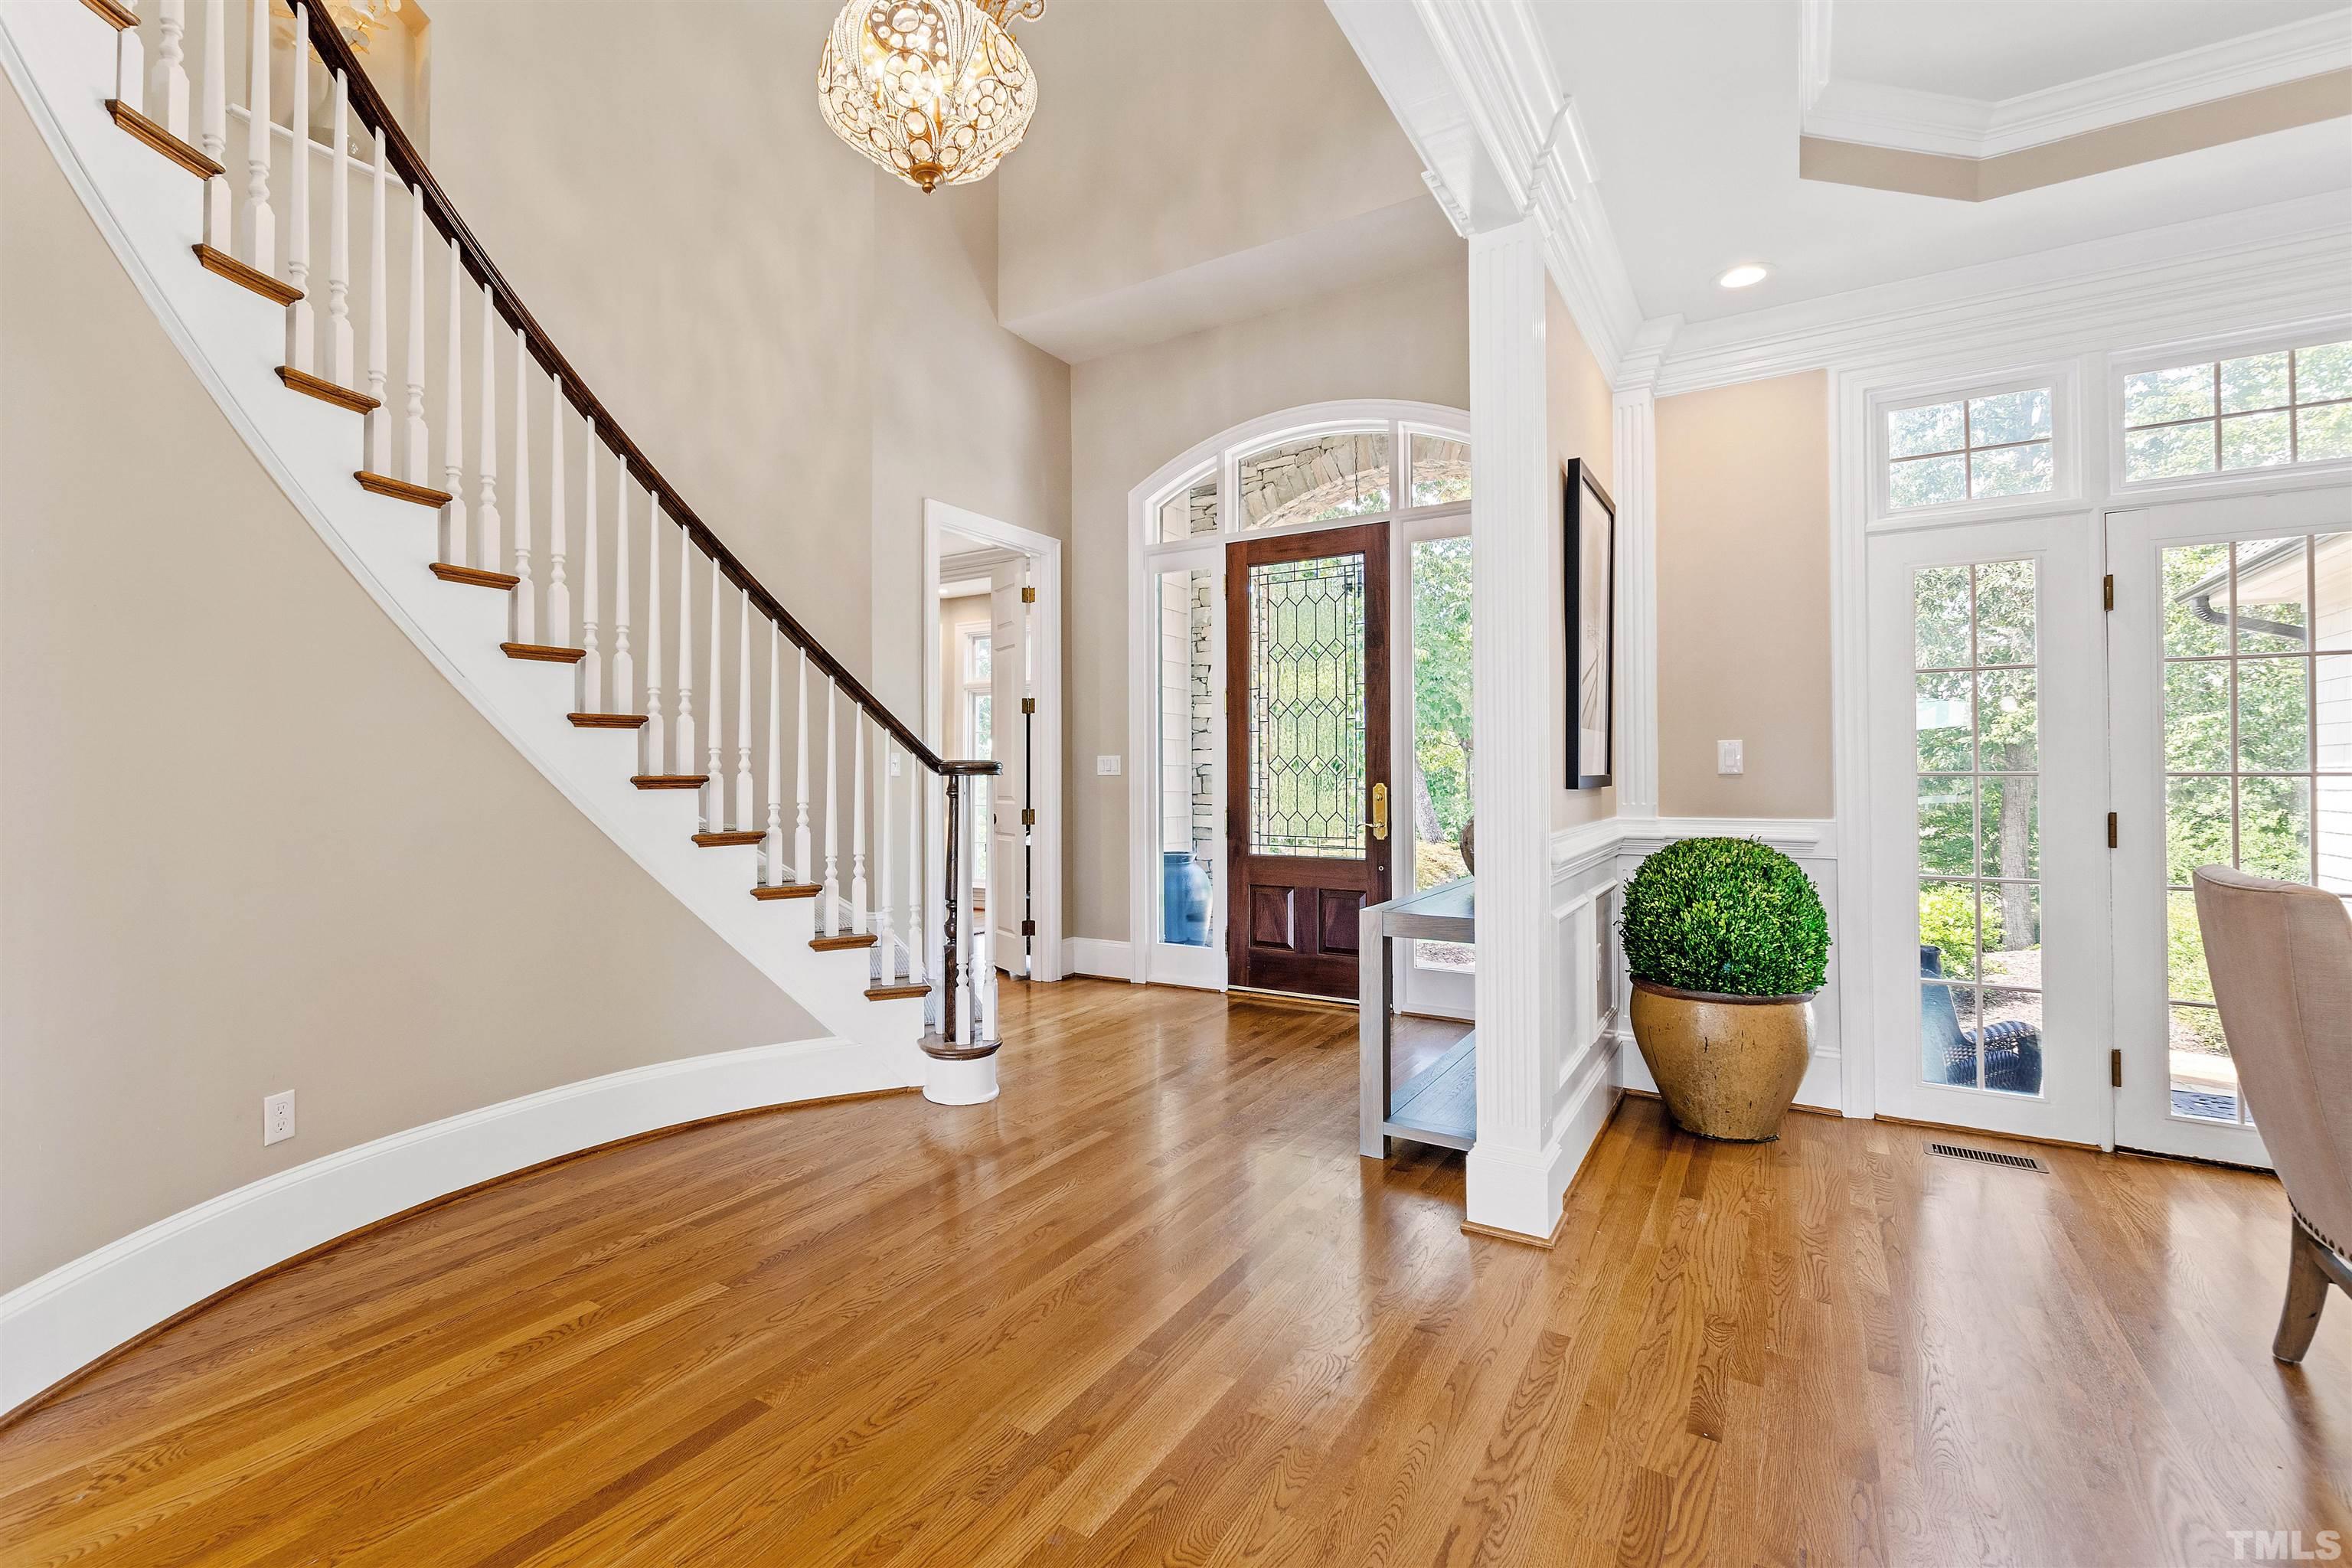 White Oak hardwood flooring throughout the main level